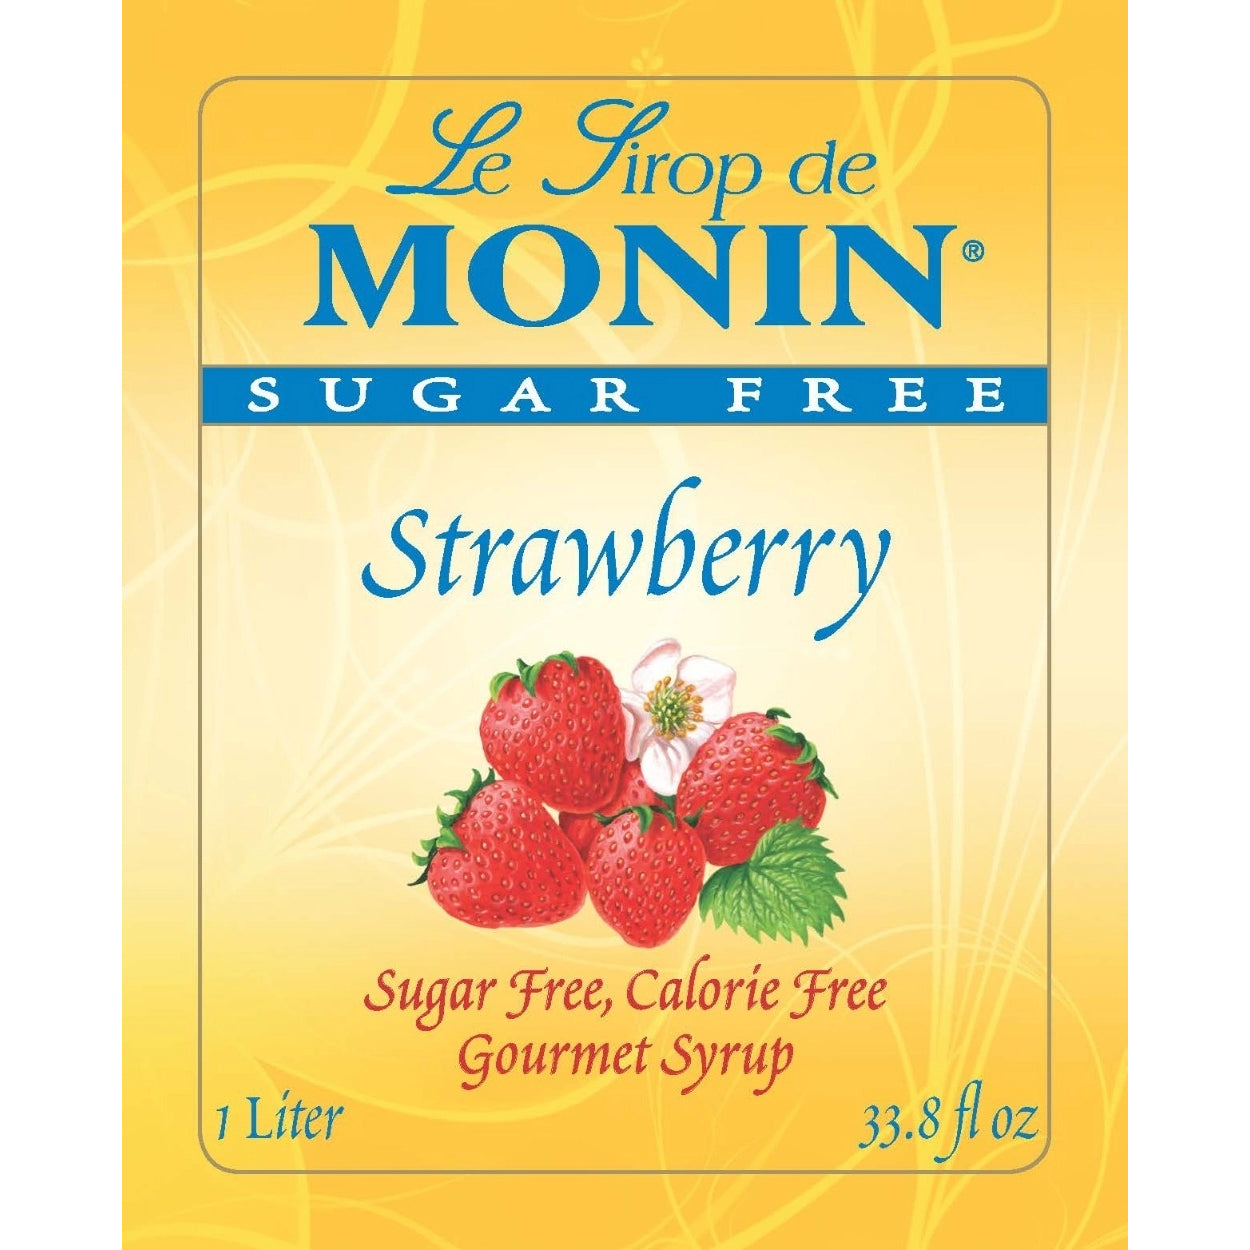 Monin Sugar Free Strawberry Syrup brand label